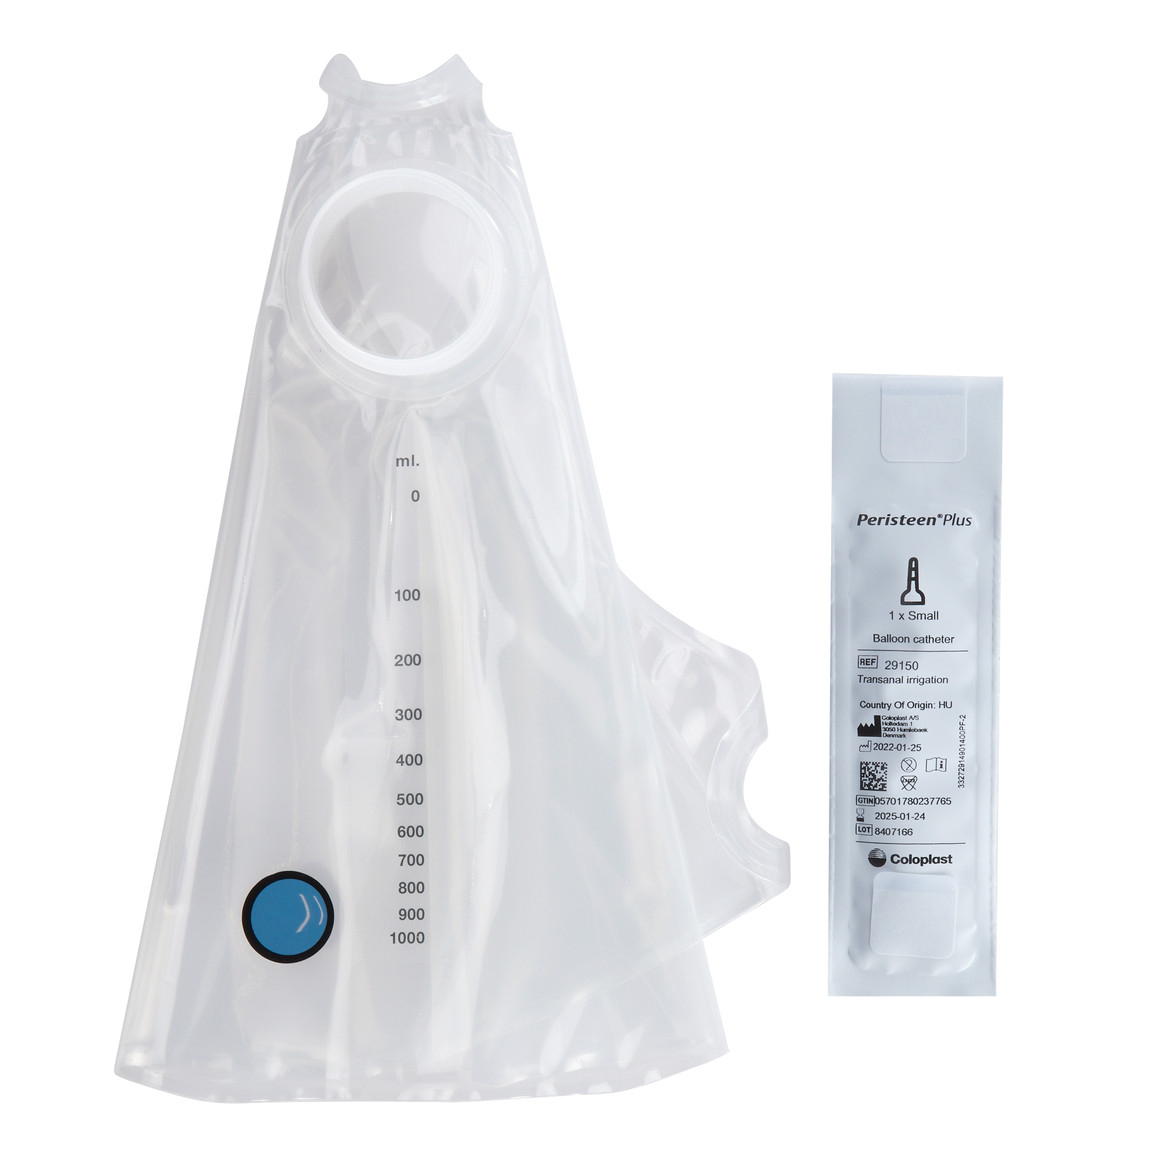 xxx-Balloon Catheter Accessory Unit Peristeen® Plus 15 Small Rectal Balloon Catheters, 1 Water Bag